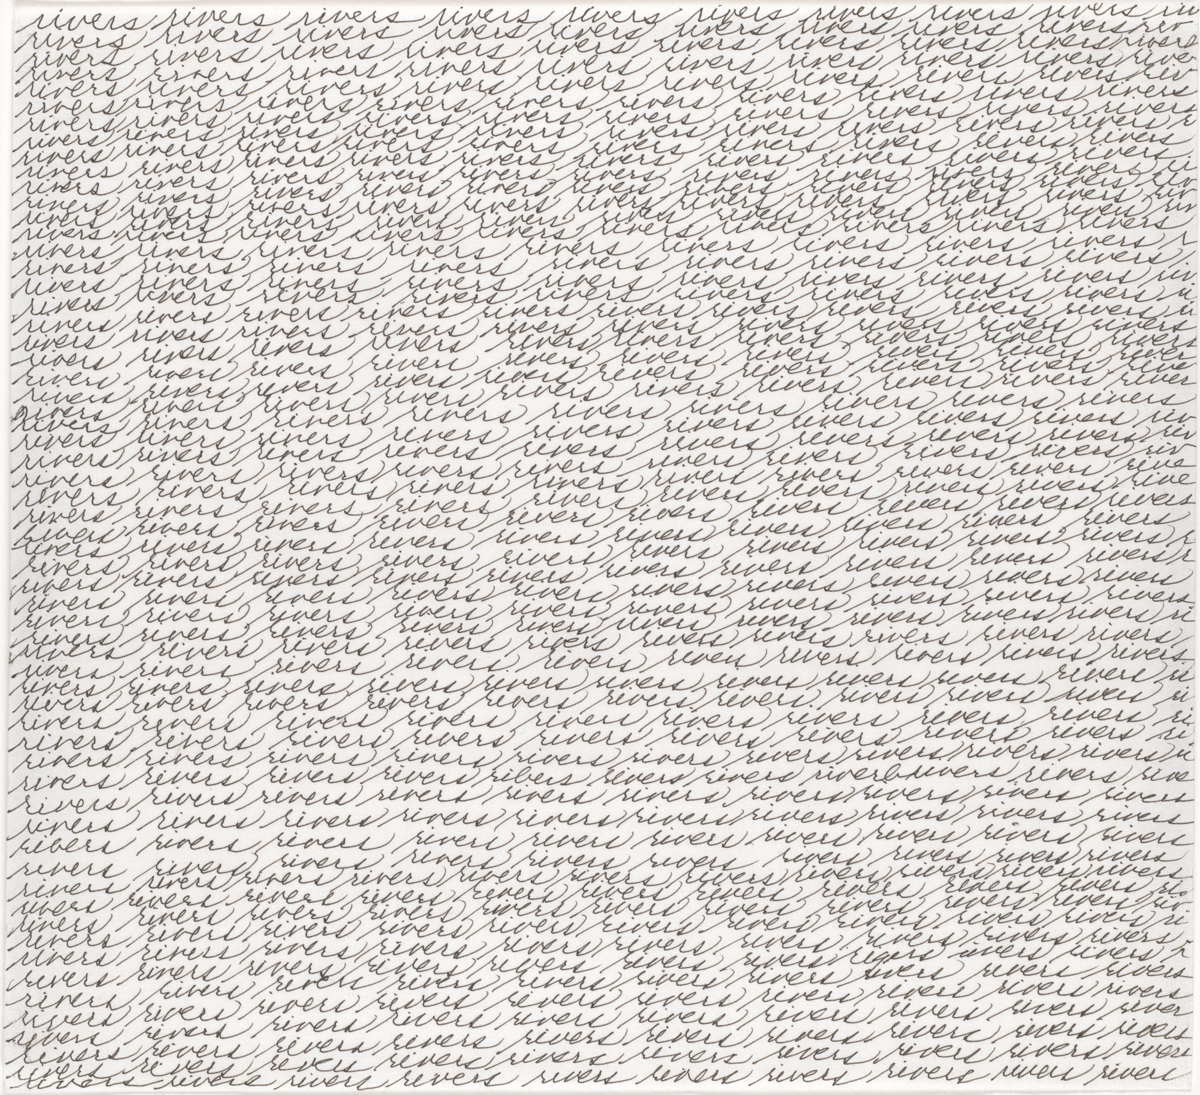 Maren Hassinger，Rivers，2007 年。纸本墨水。装裱：14 ¼ x 13 ¼ x 1 ¼ 英寸。由艺术家提供。